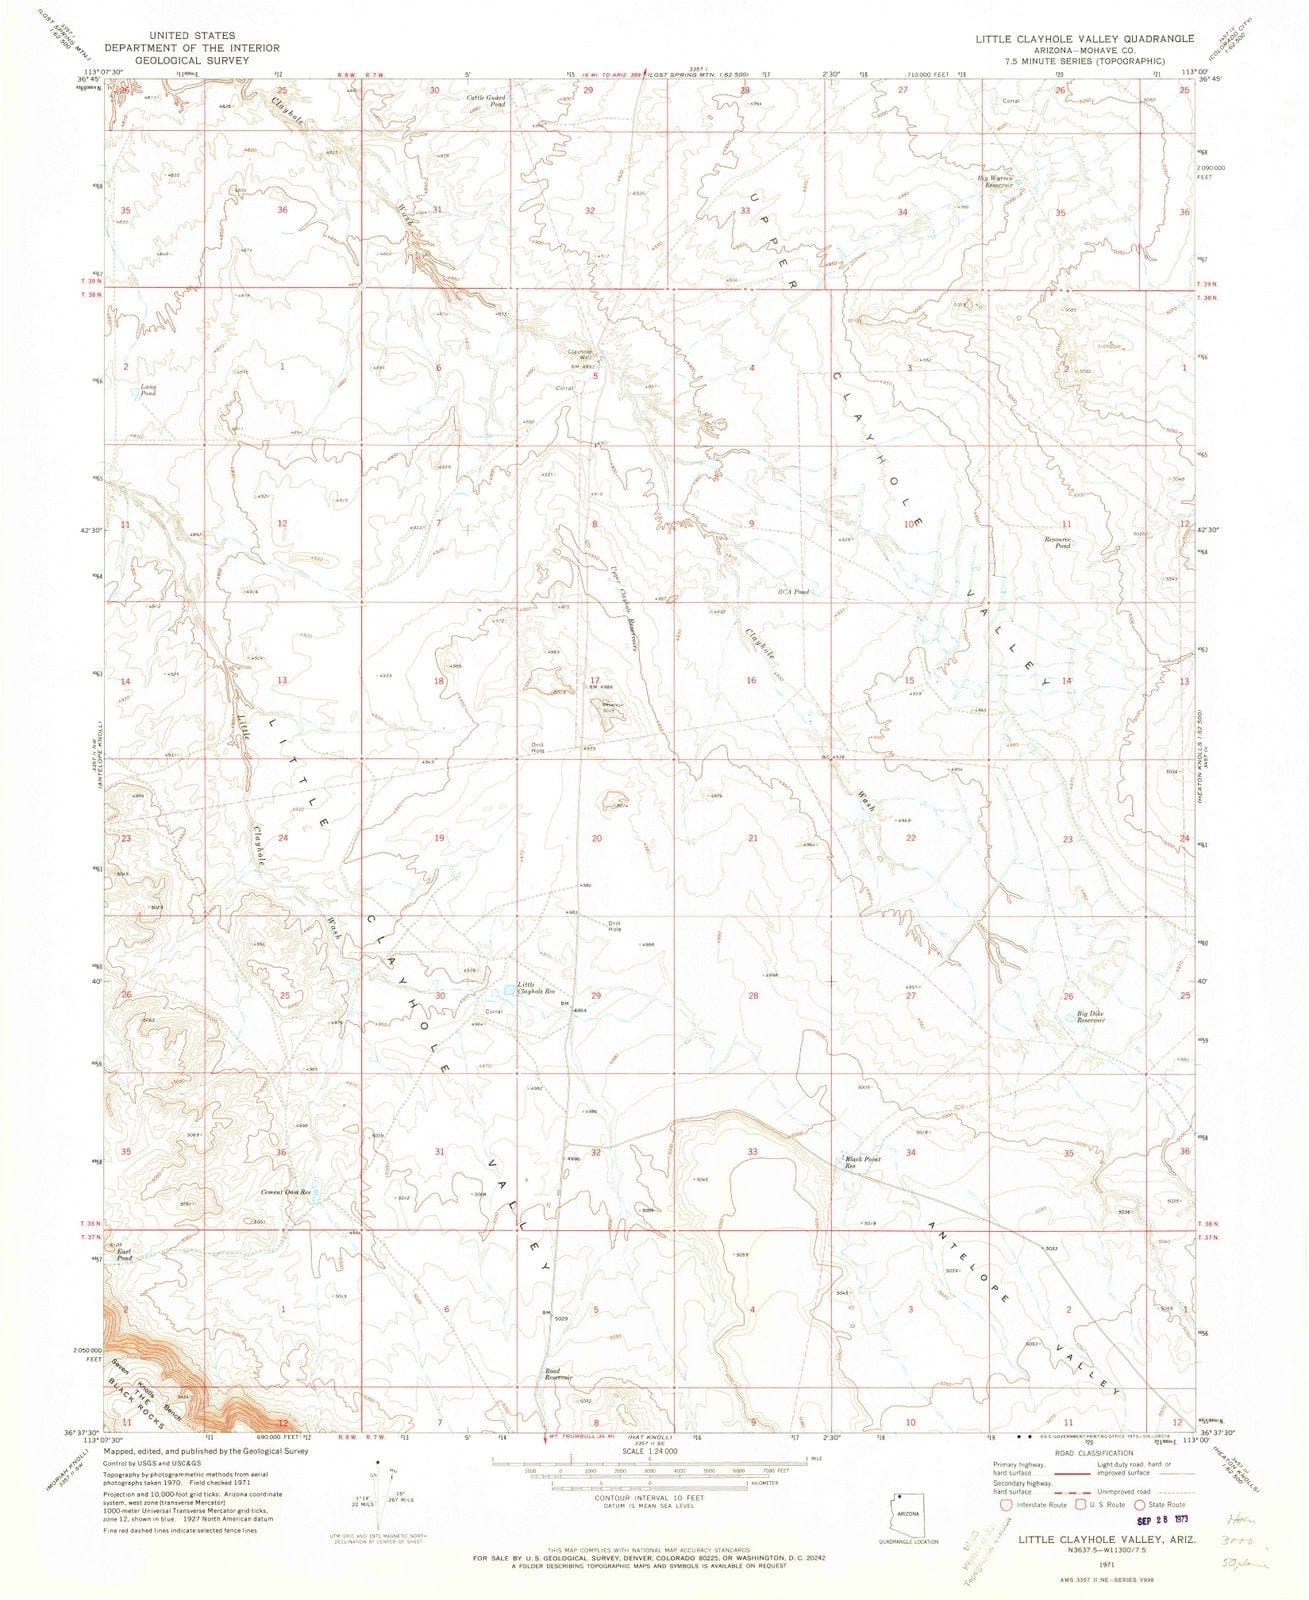 1971 Little Clayhole Valley, AZ - Arizona - USGS Topographic Map